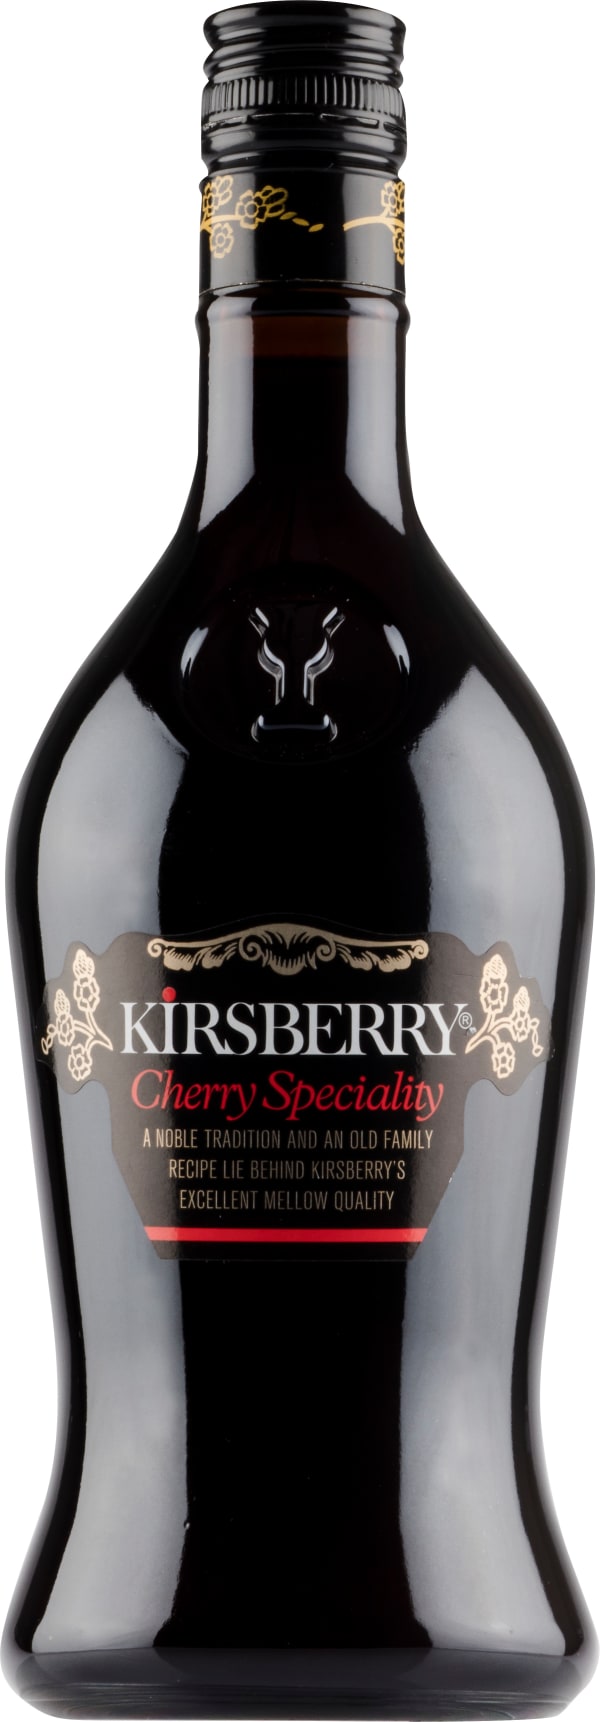 Kirsberry Cherry Speciality.